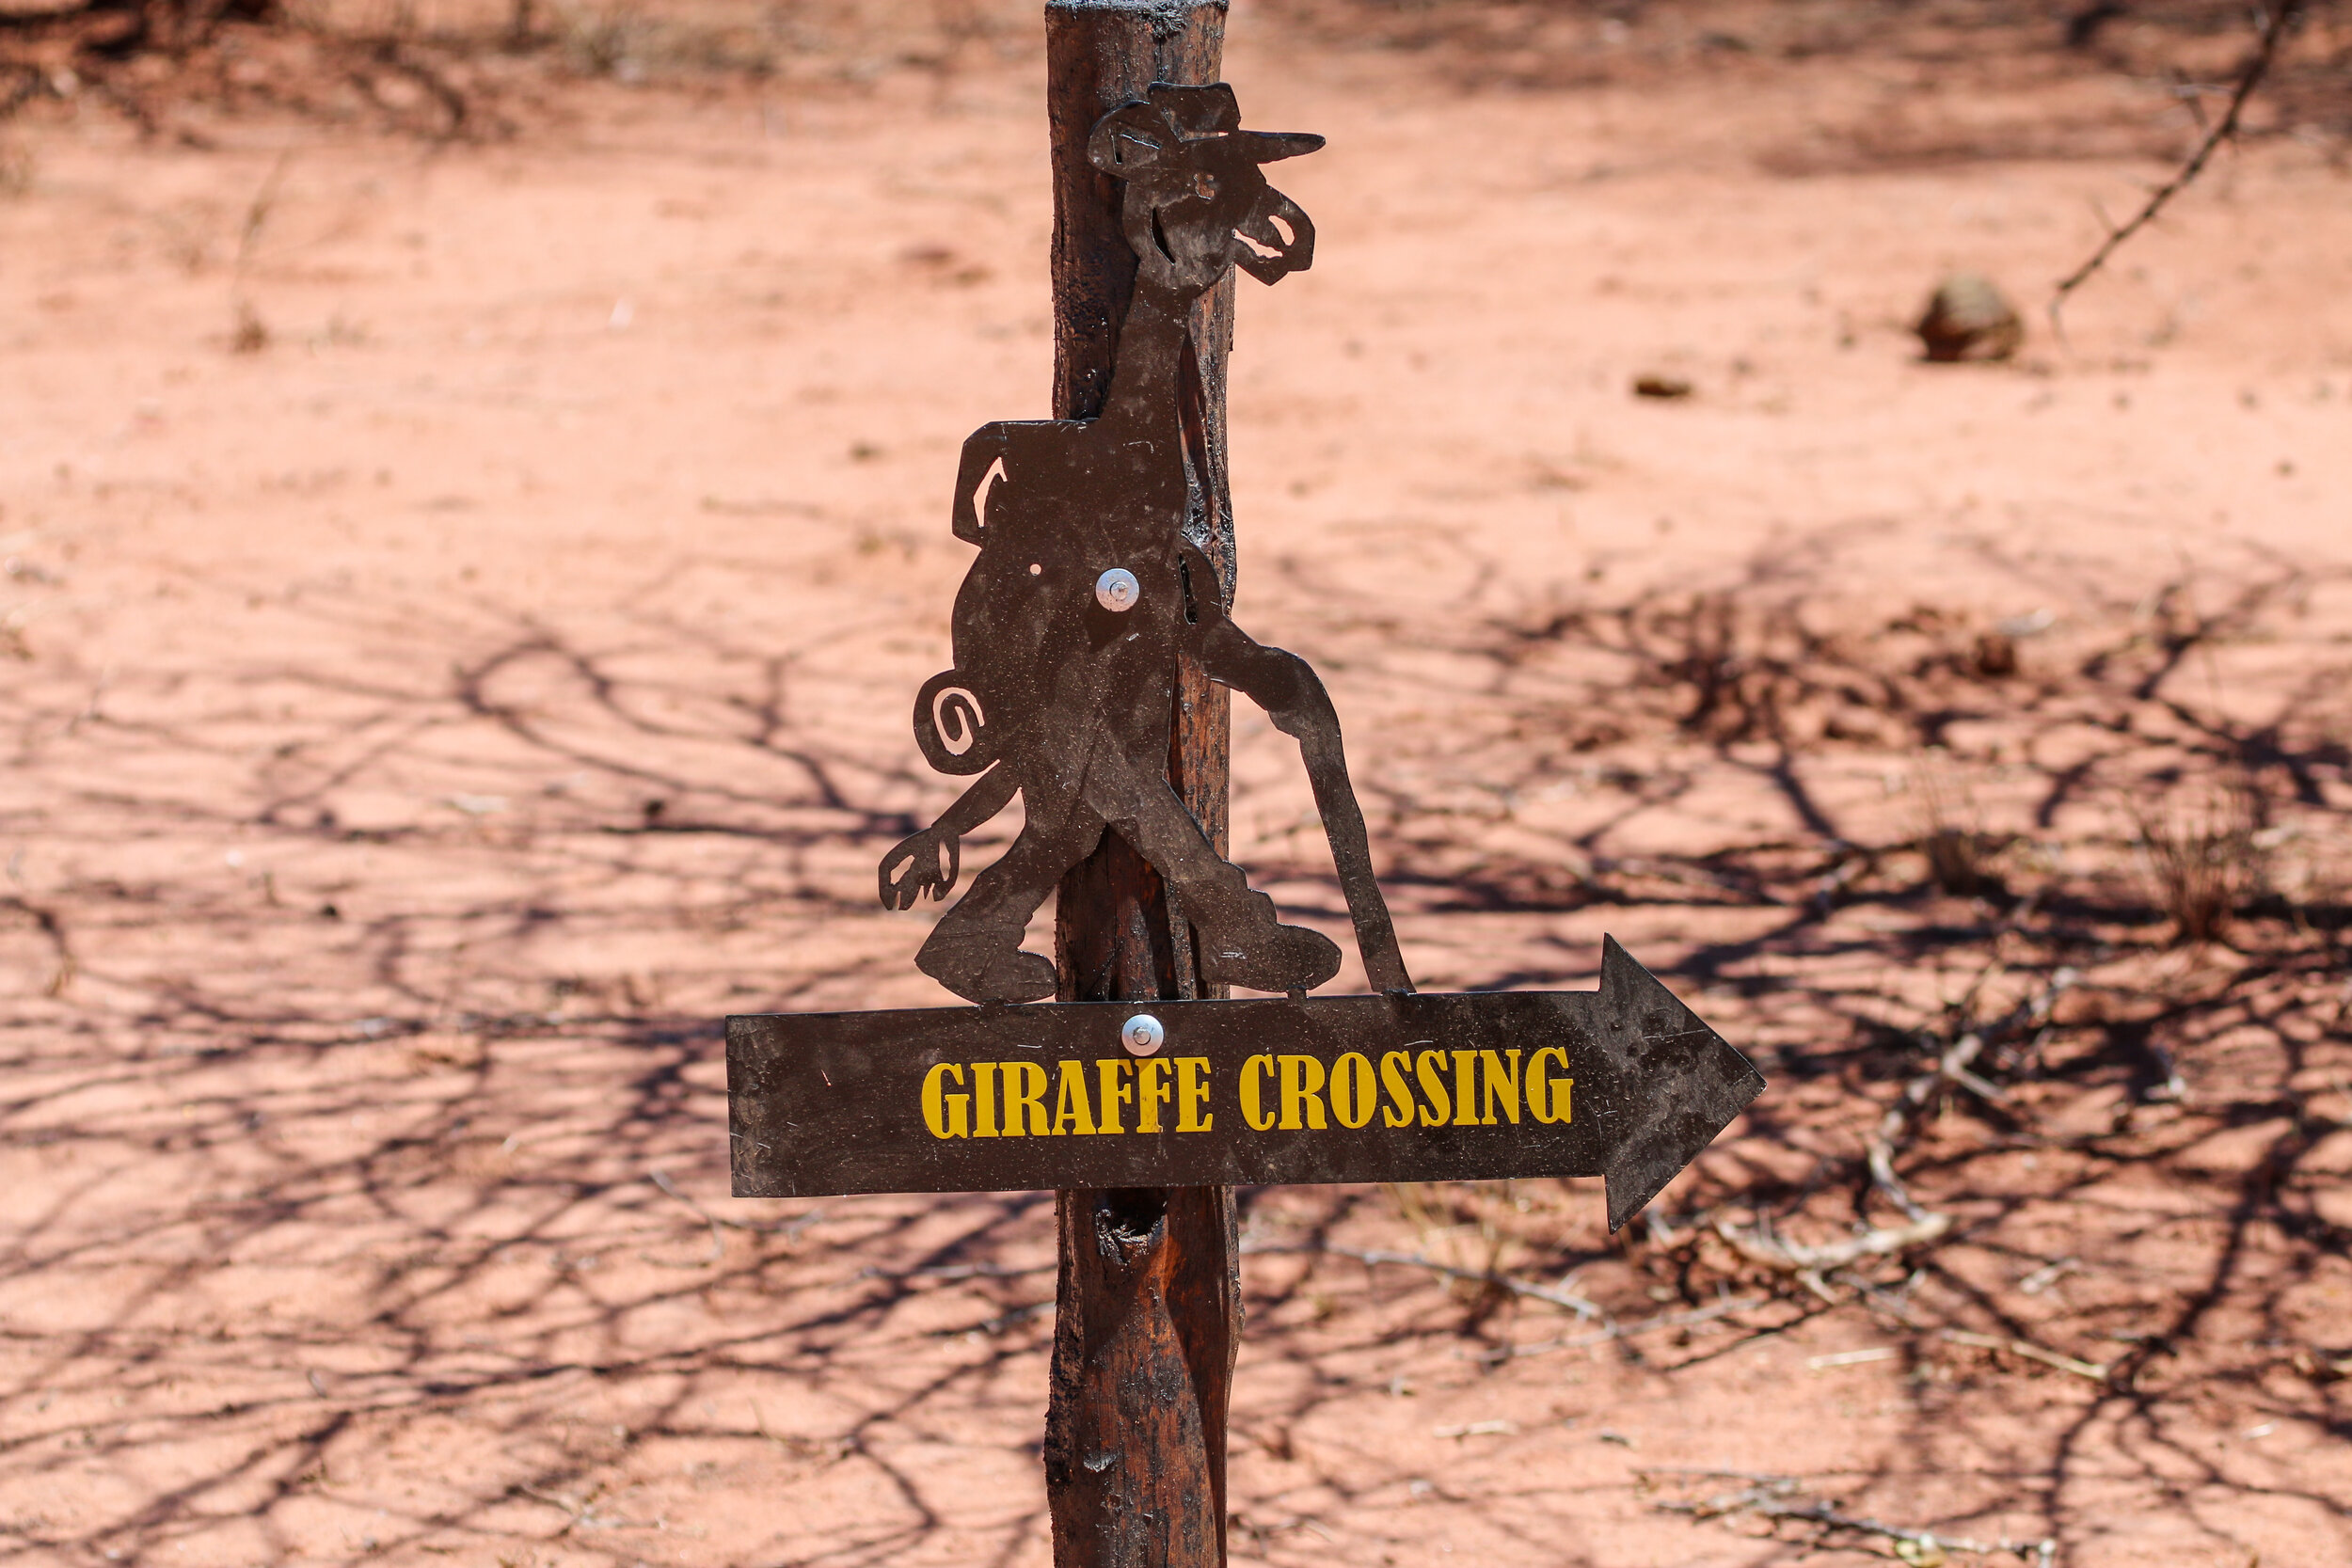 Giraffe crossing sign